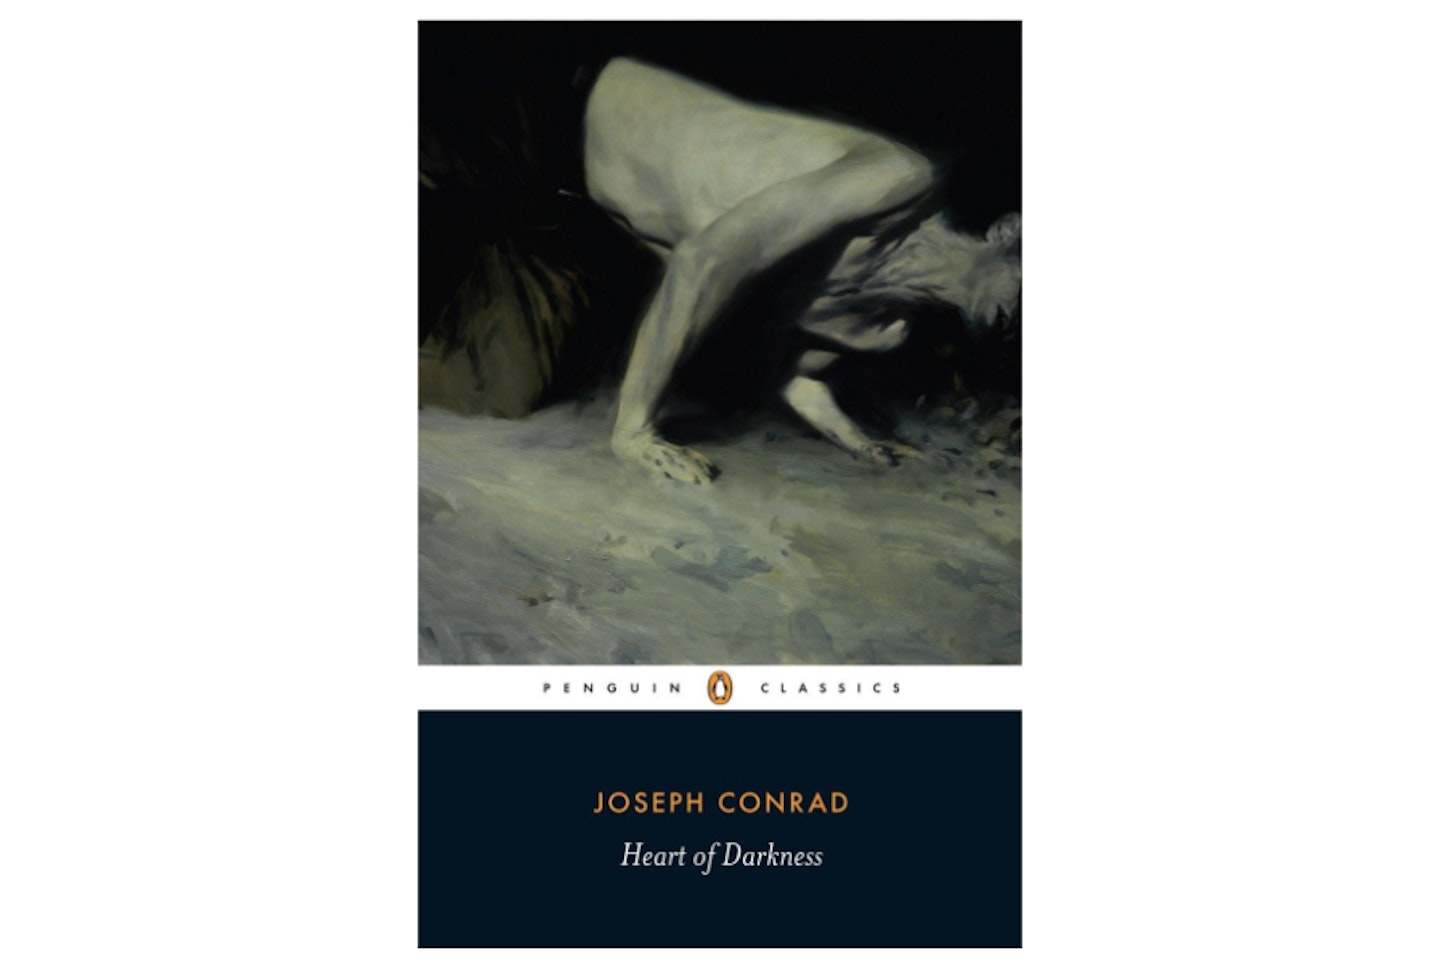 Heart of Darkness by Joseph Conrad, £4.79